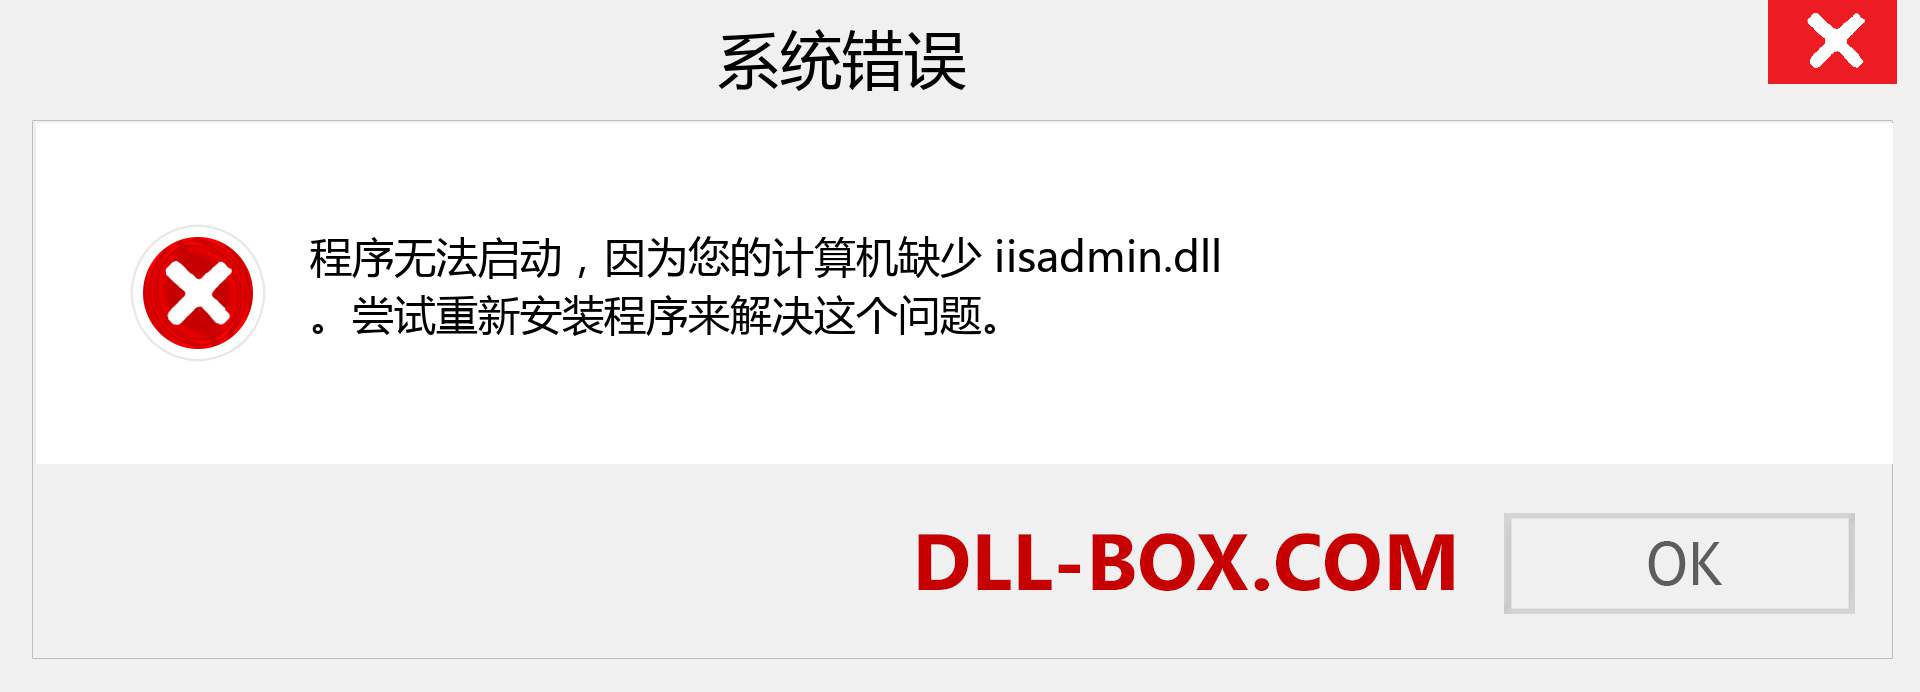 iisadmin.dll 文件丢失？。 适用于 Windows 7、8、10 的下载 - 修复 Windows、照片、图像上的 iisadmin dll 丢失错误